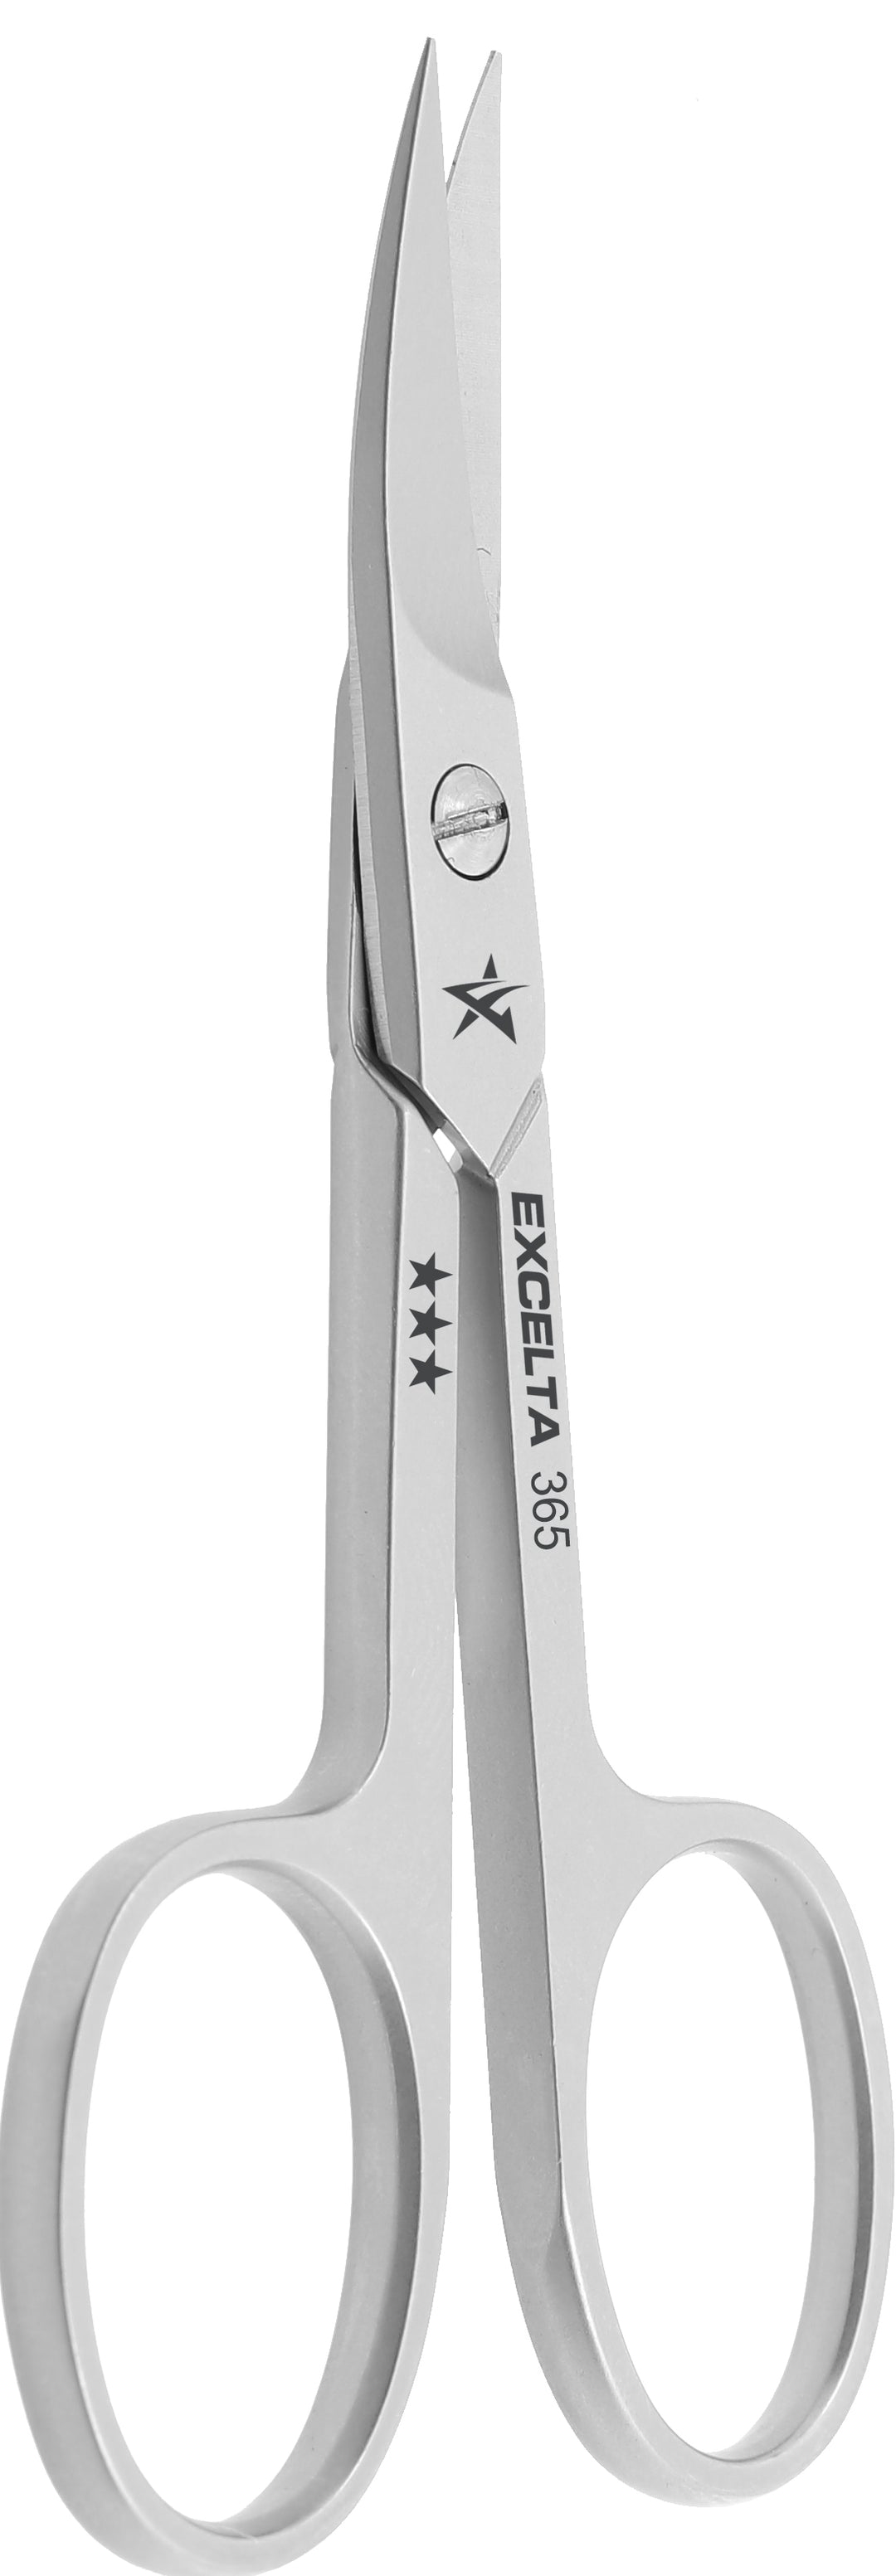 Excelta 365 Scissors - Medical Grade -17° Curved 1.088" Blade - SS